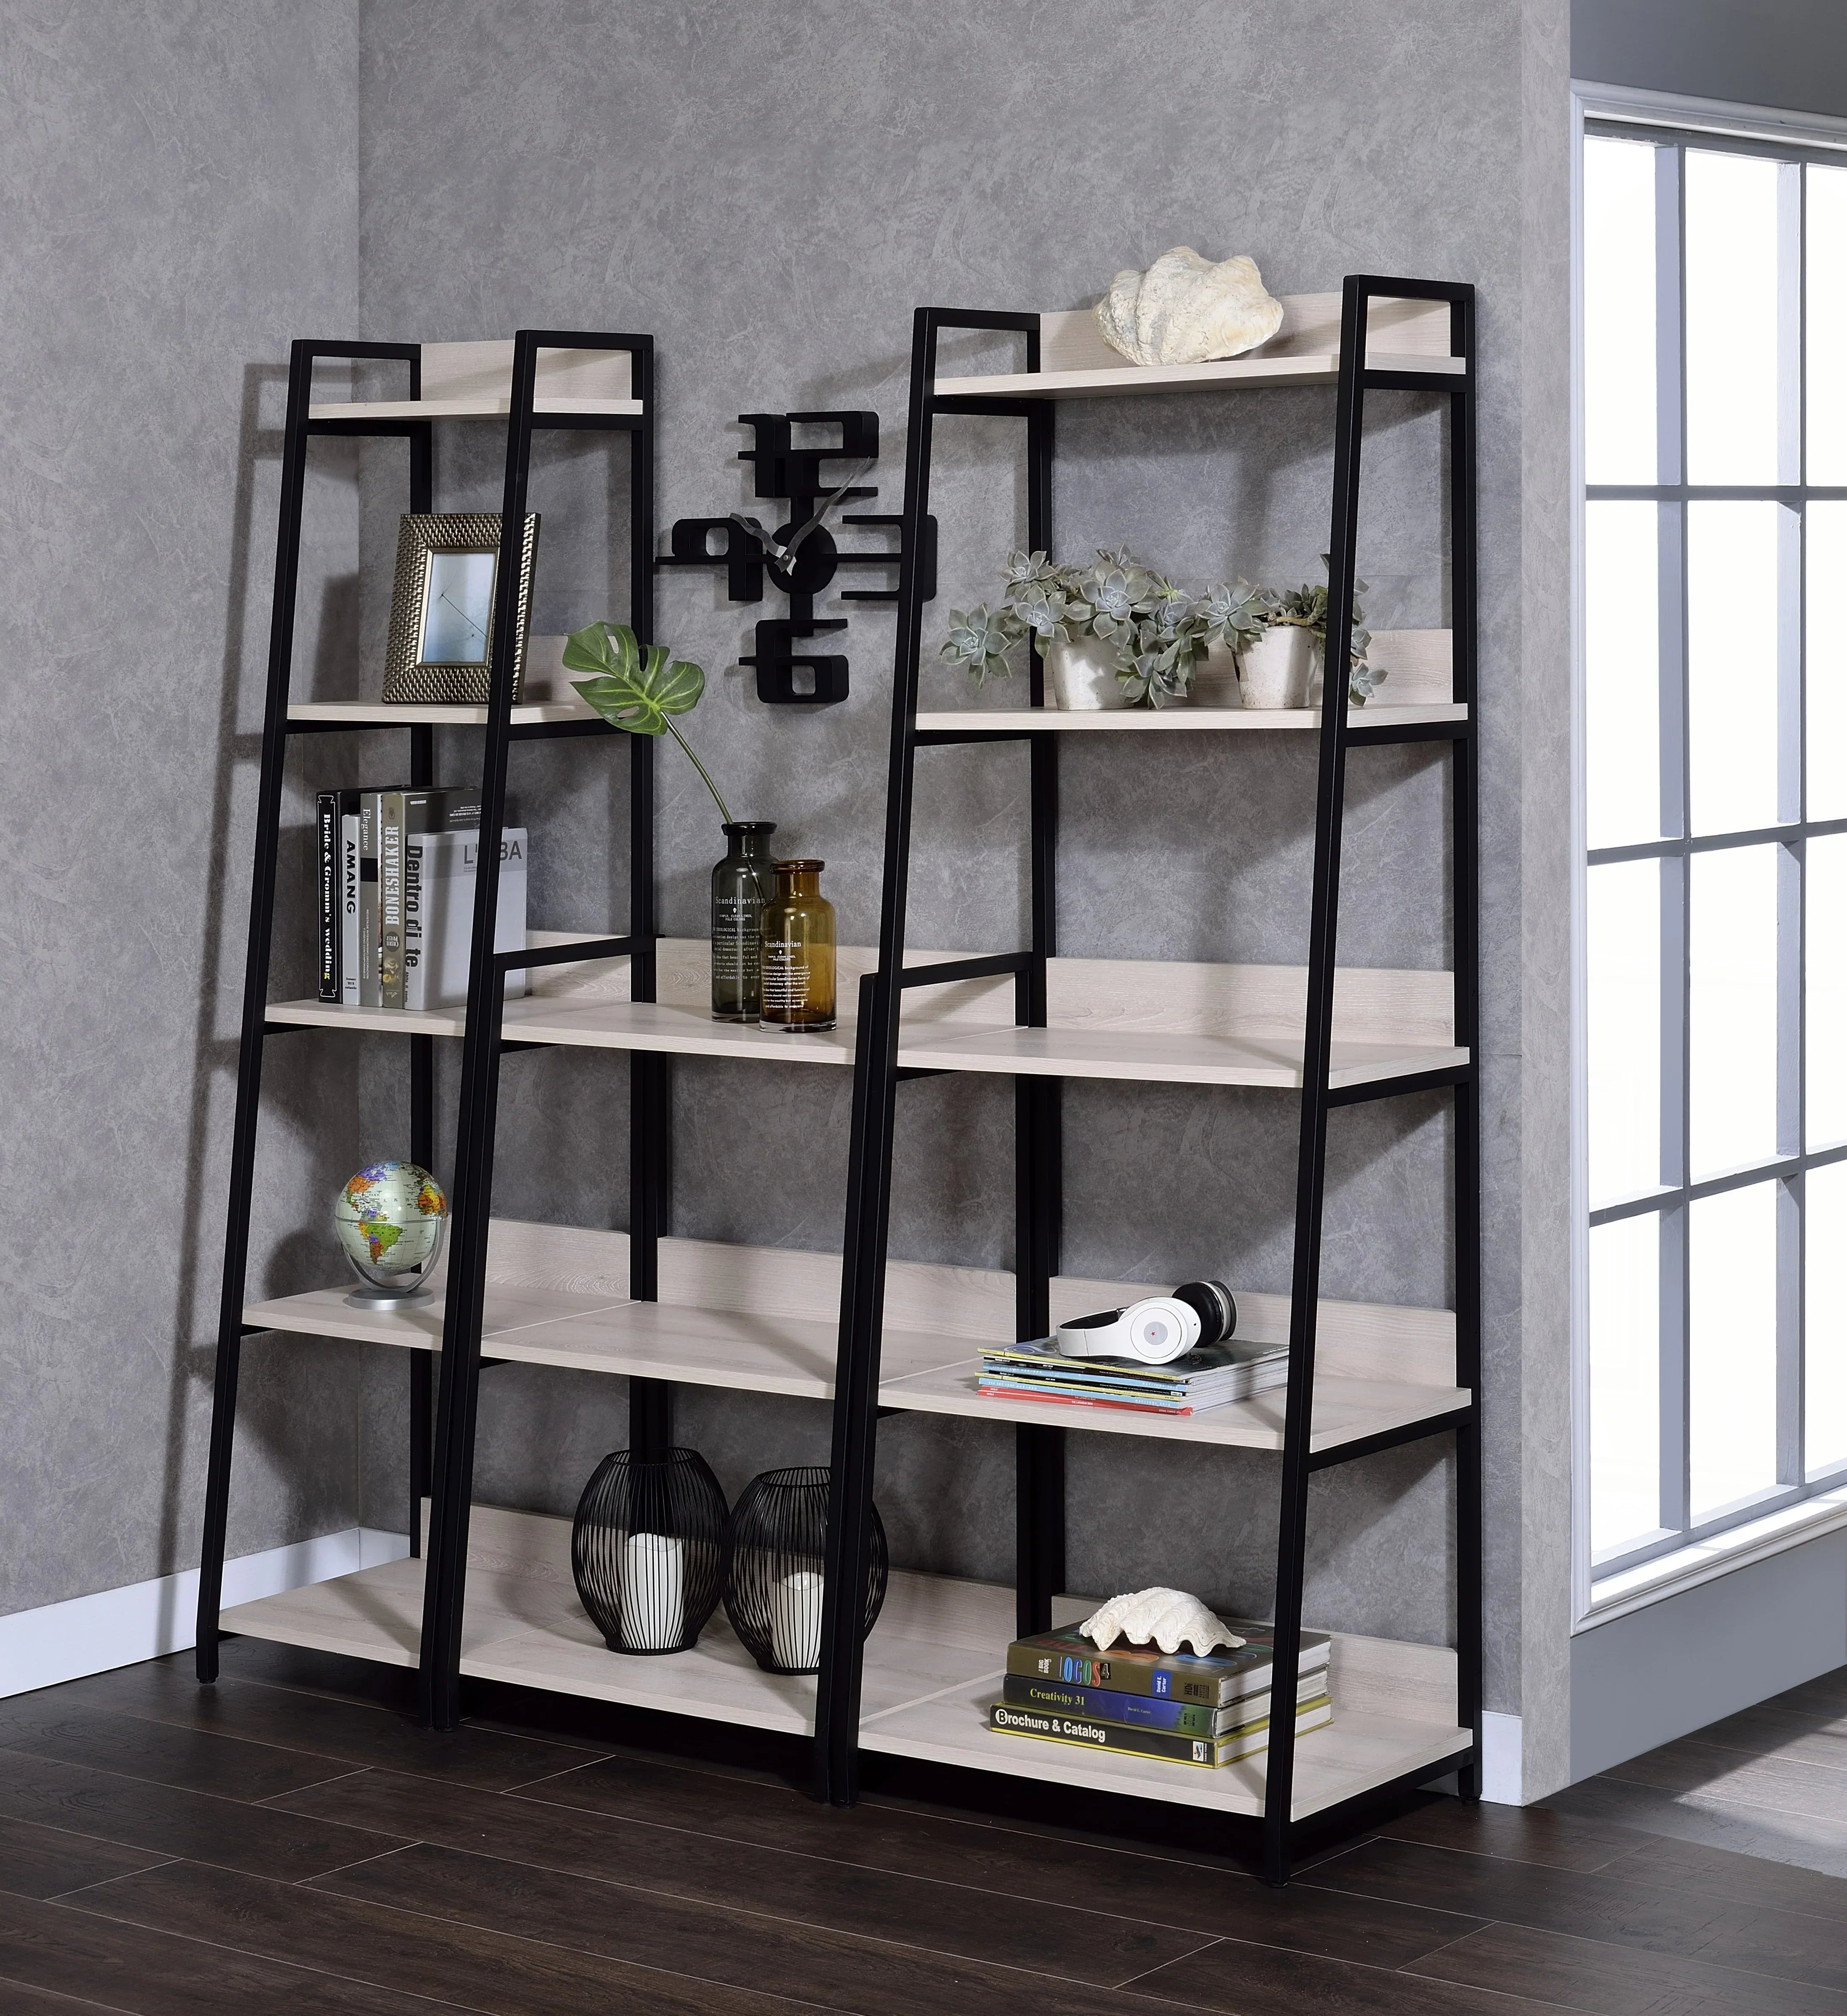 Wendral Natural & Black Bookshelf Model 92673 By ACME Furniture